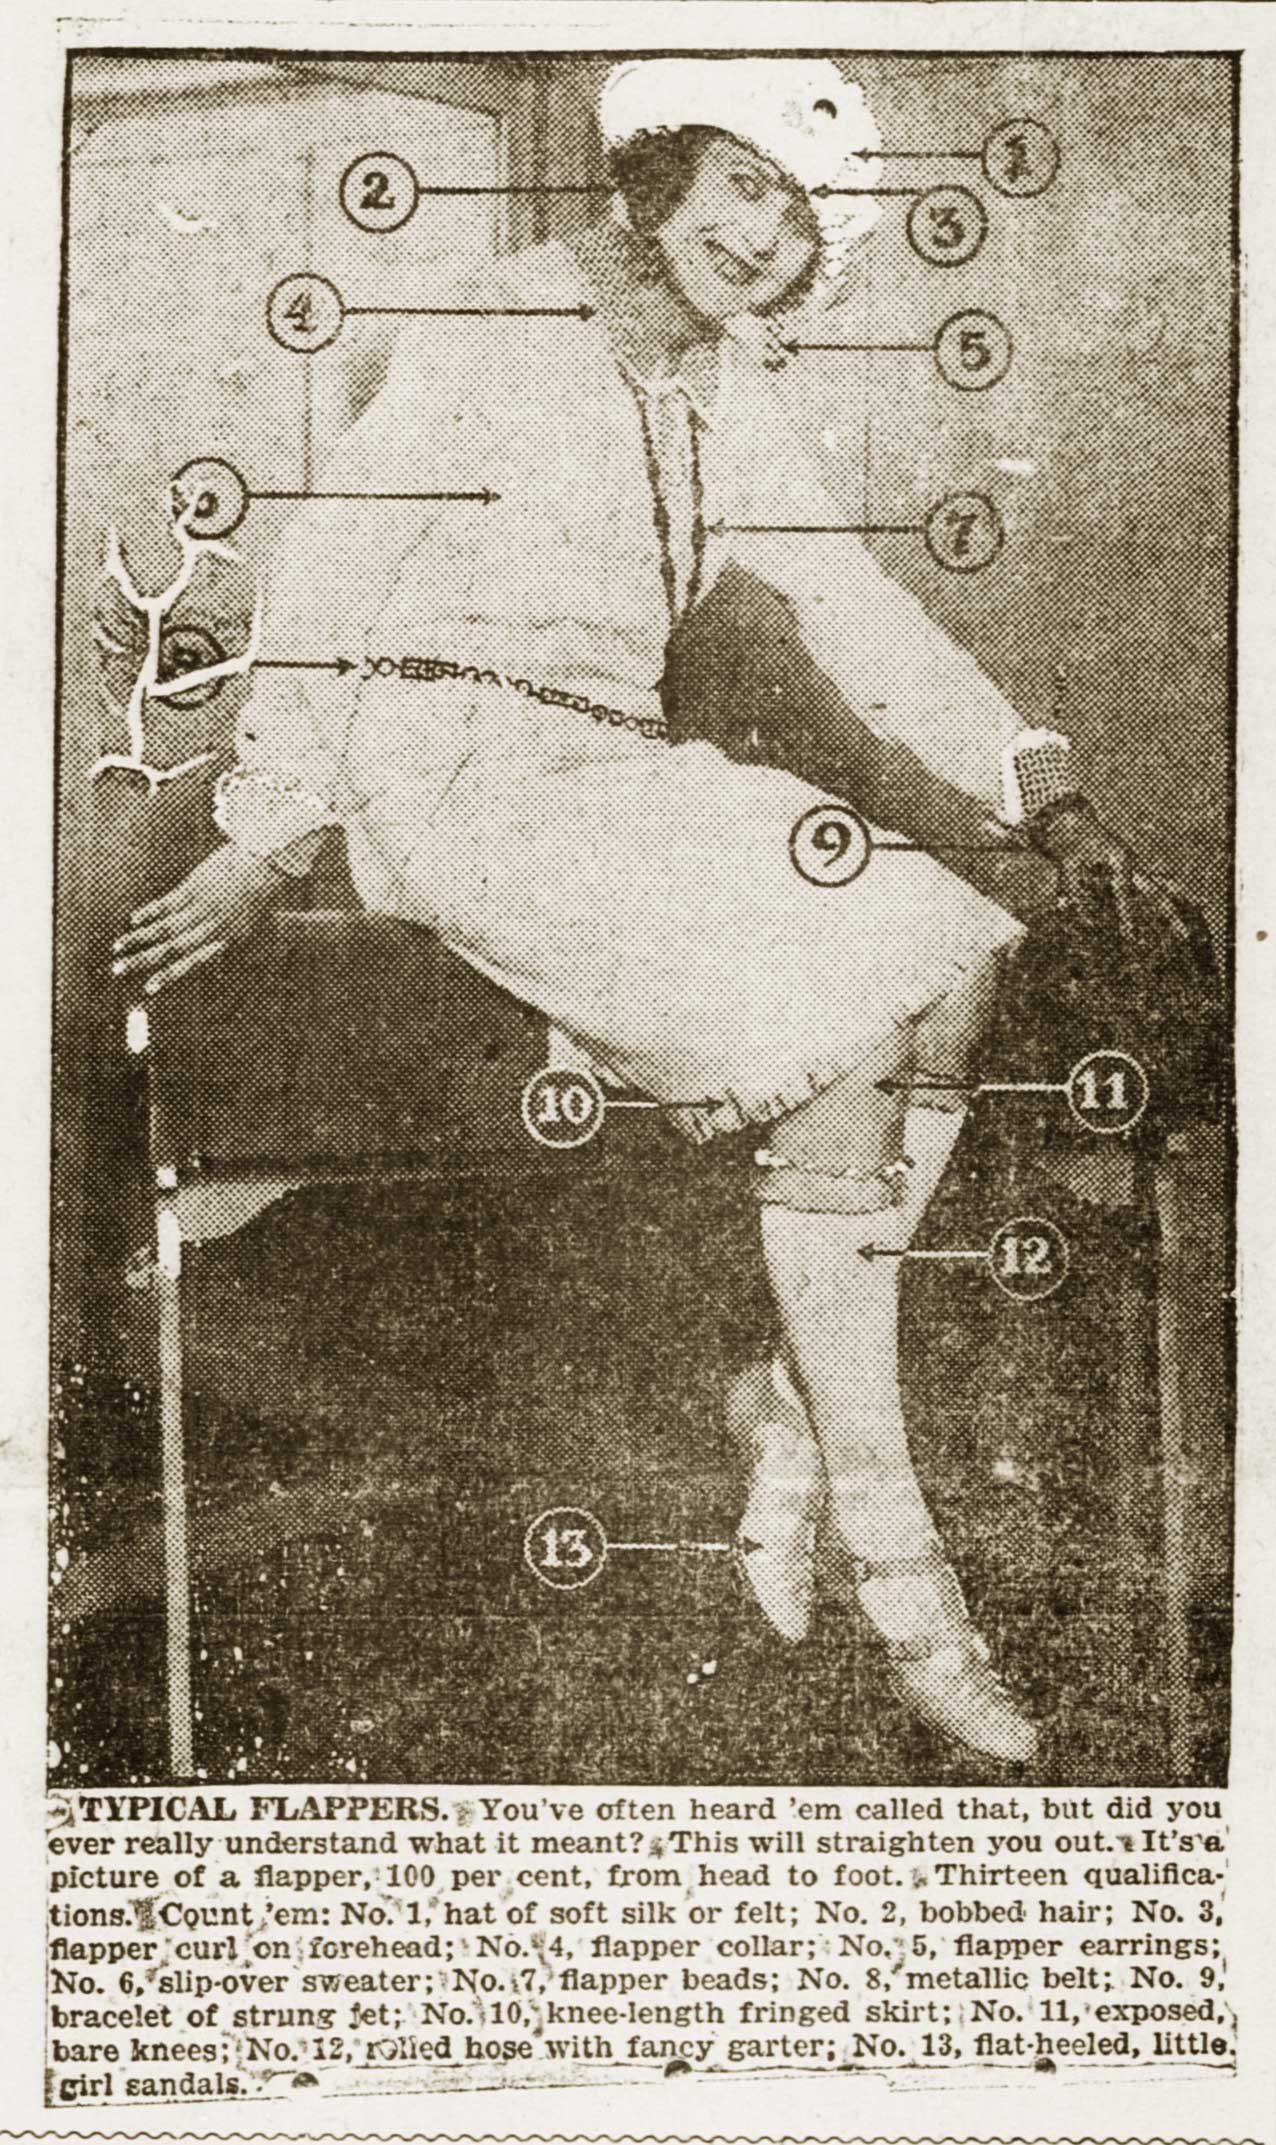 1920s-fashion---The-Typical-Flapper---1922-news-headline